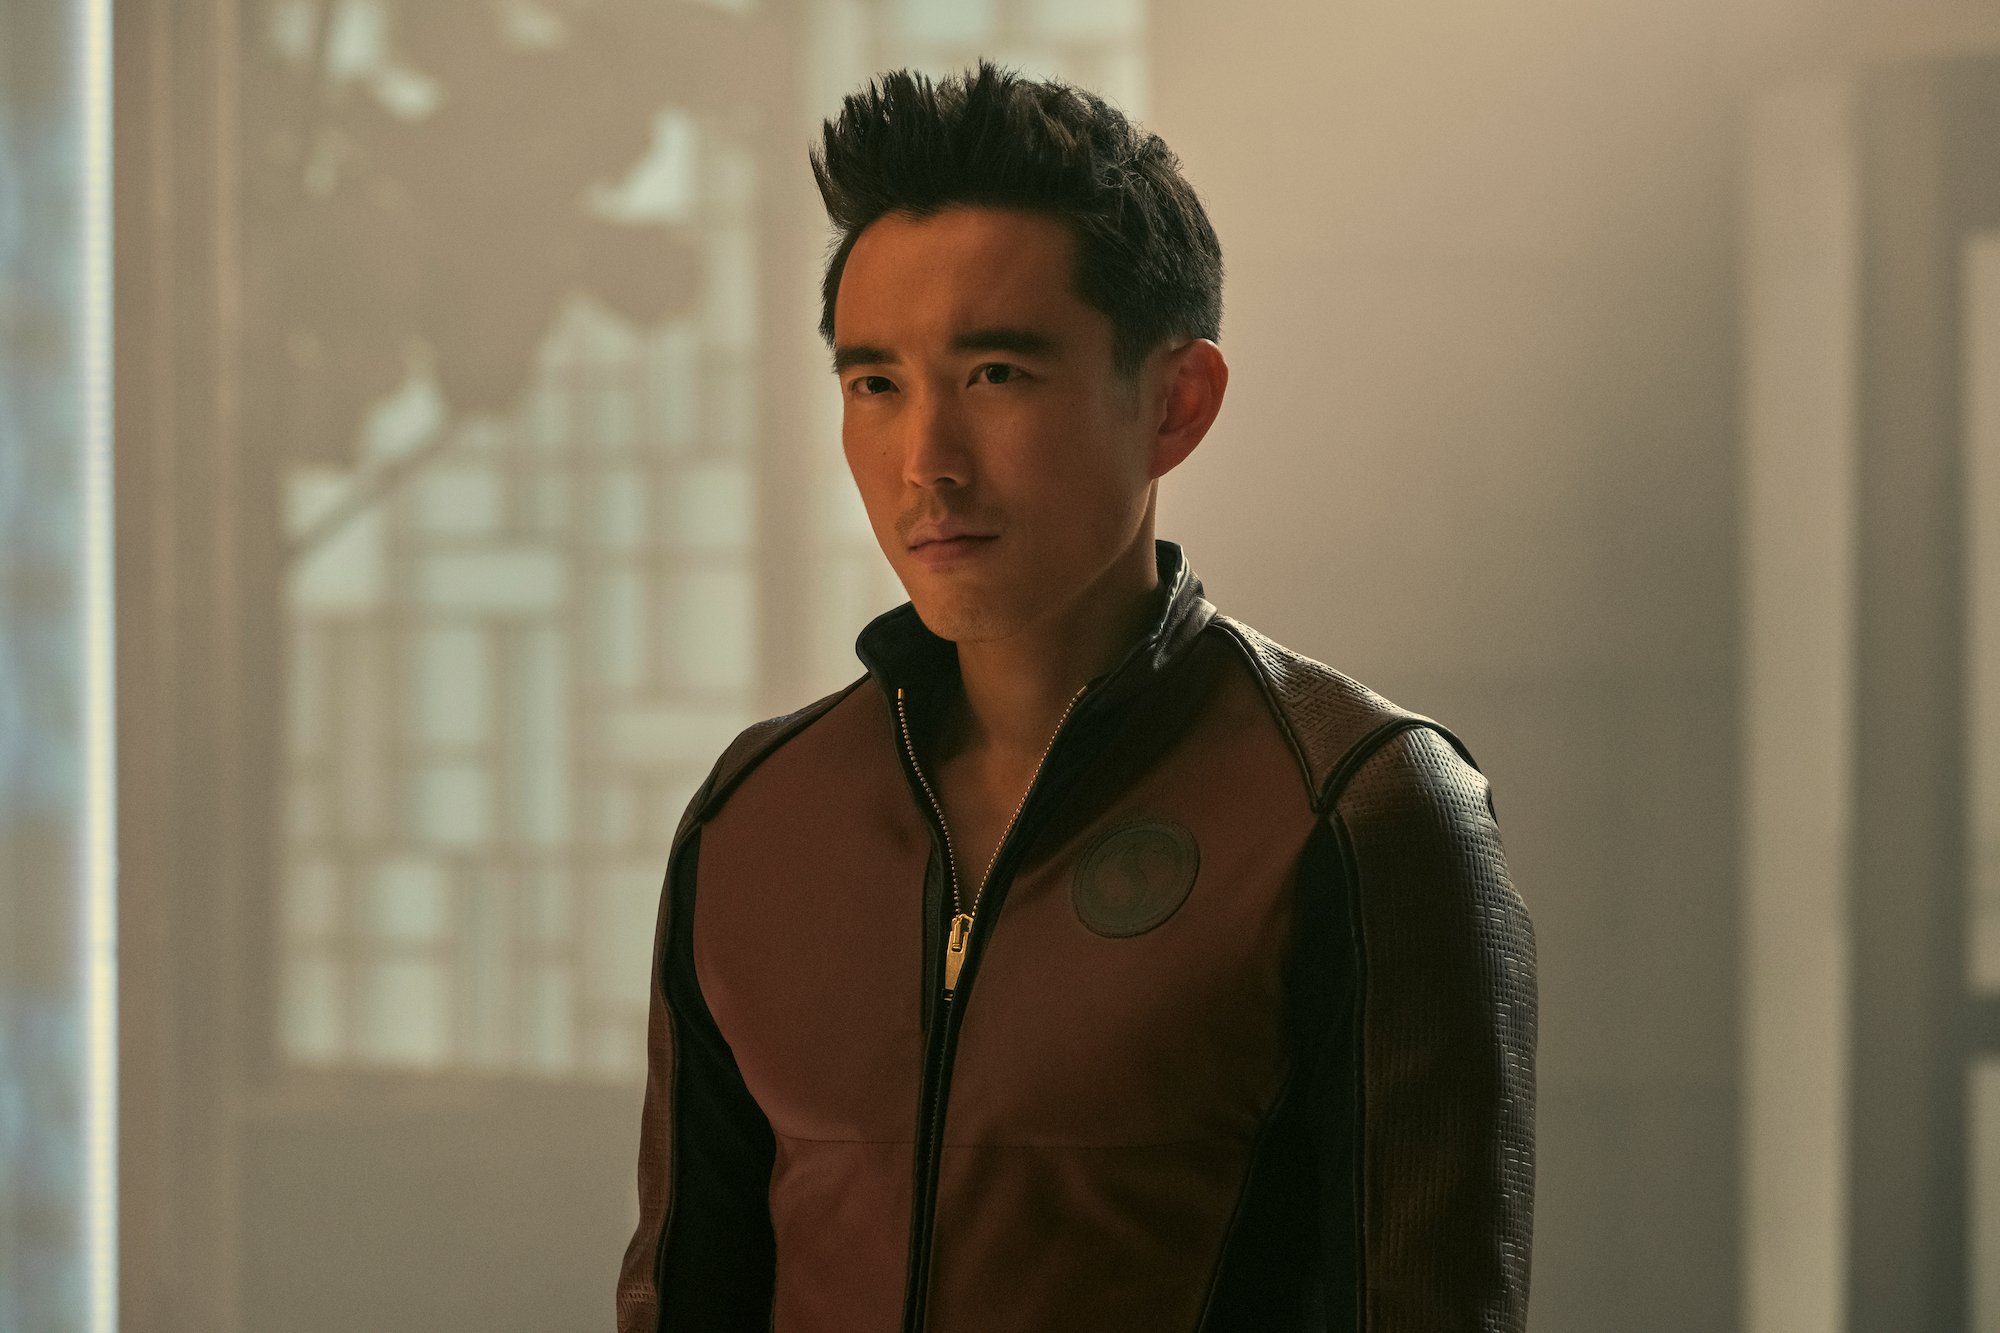 'The Umbrella Academy' Season 3 mid-credits scene features Ben, seen here wearing his Sparrow Academy uniform.